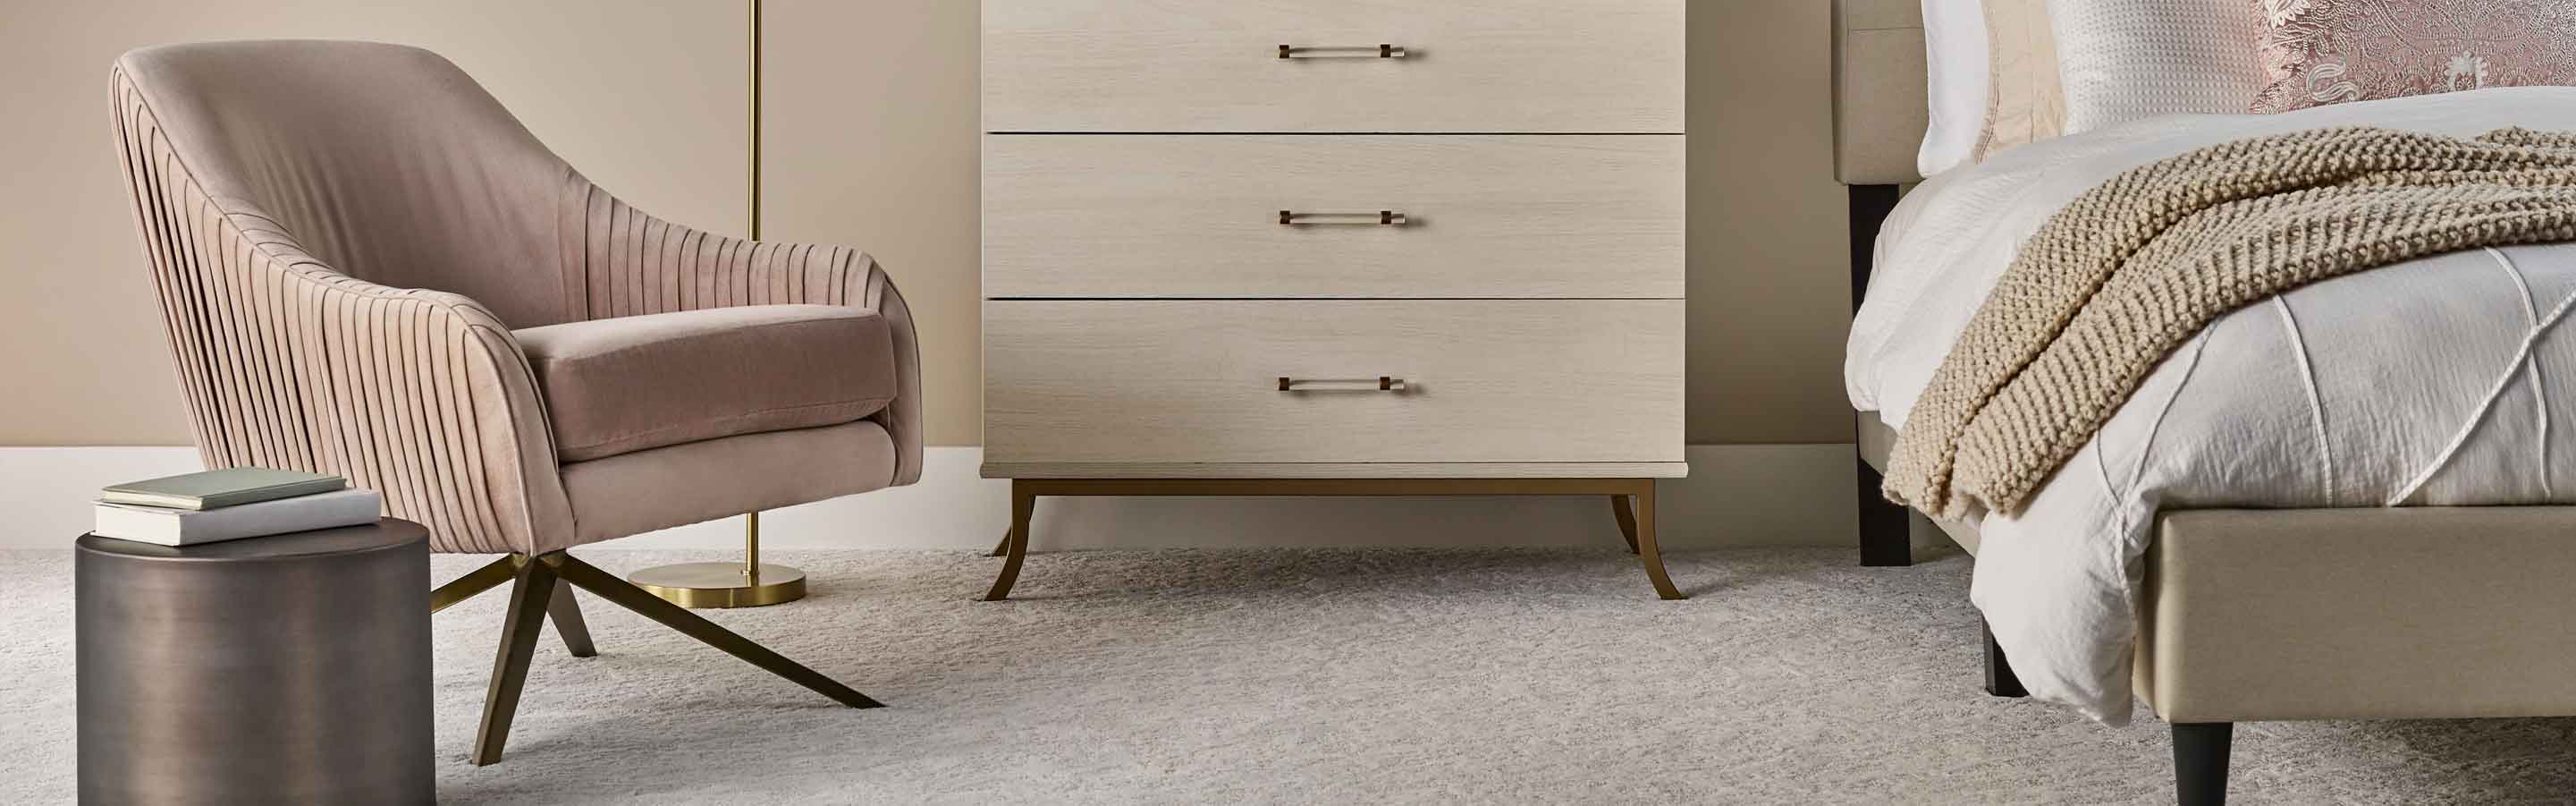 cream tone carpet in bedroom with tan bedroom furniture